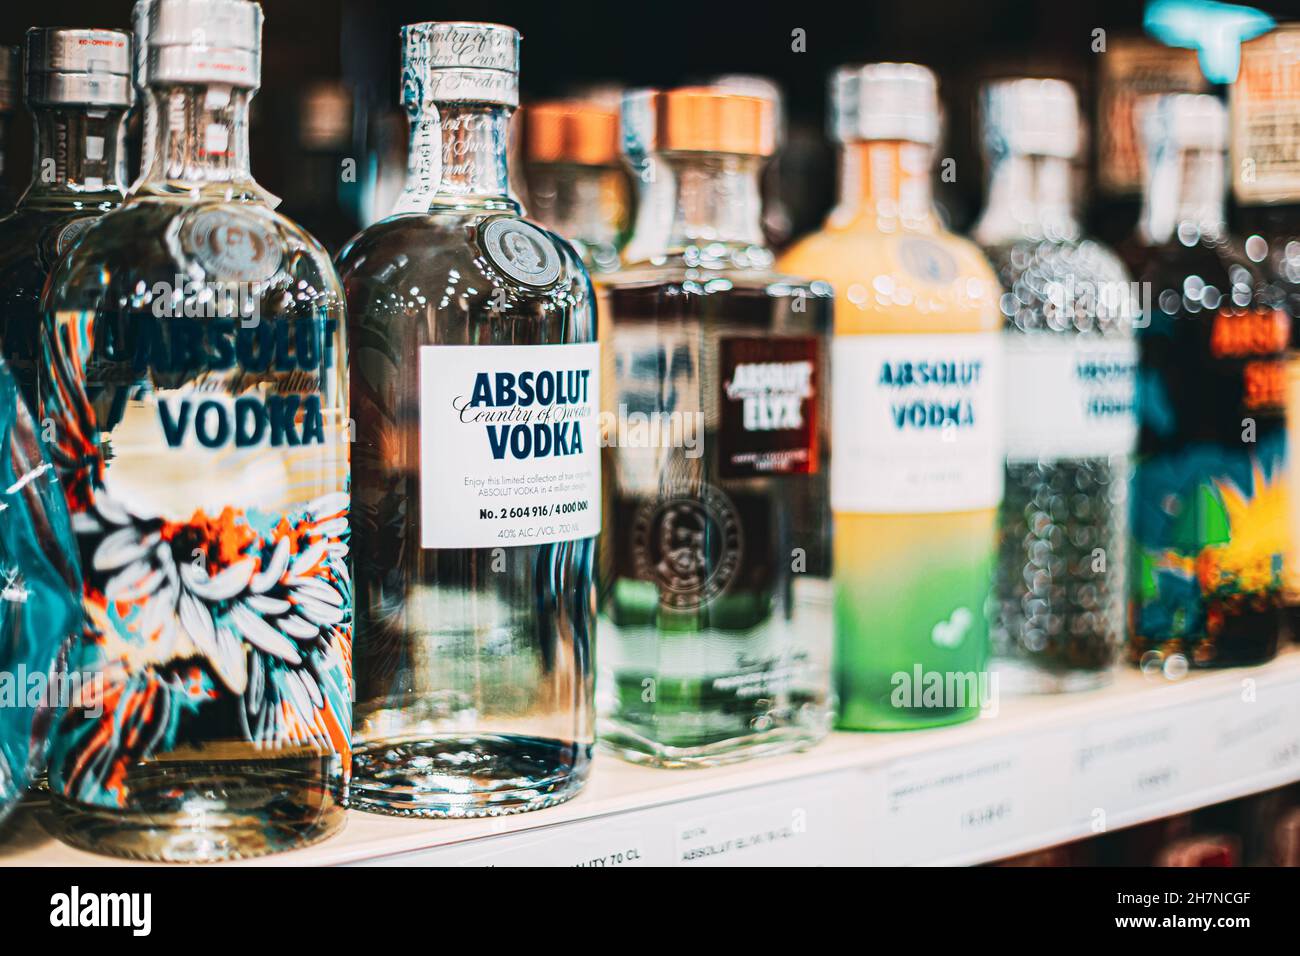 Absolut - Vodka - Bottle Grove